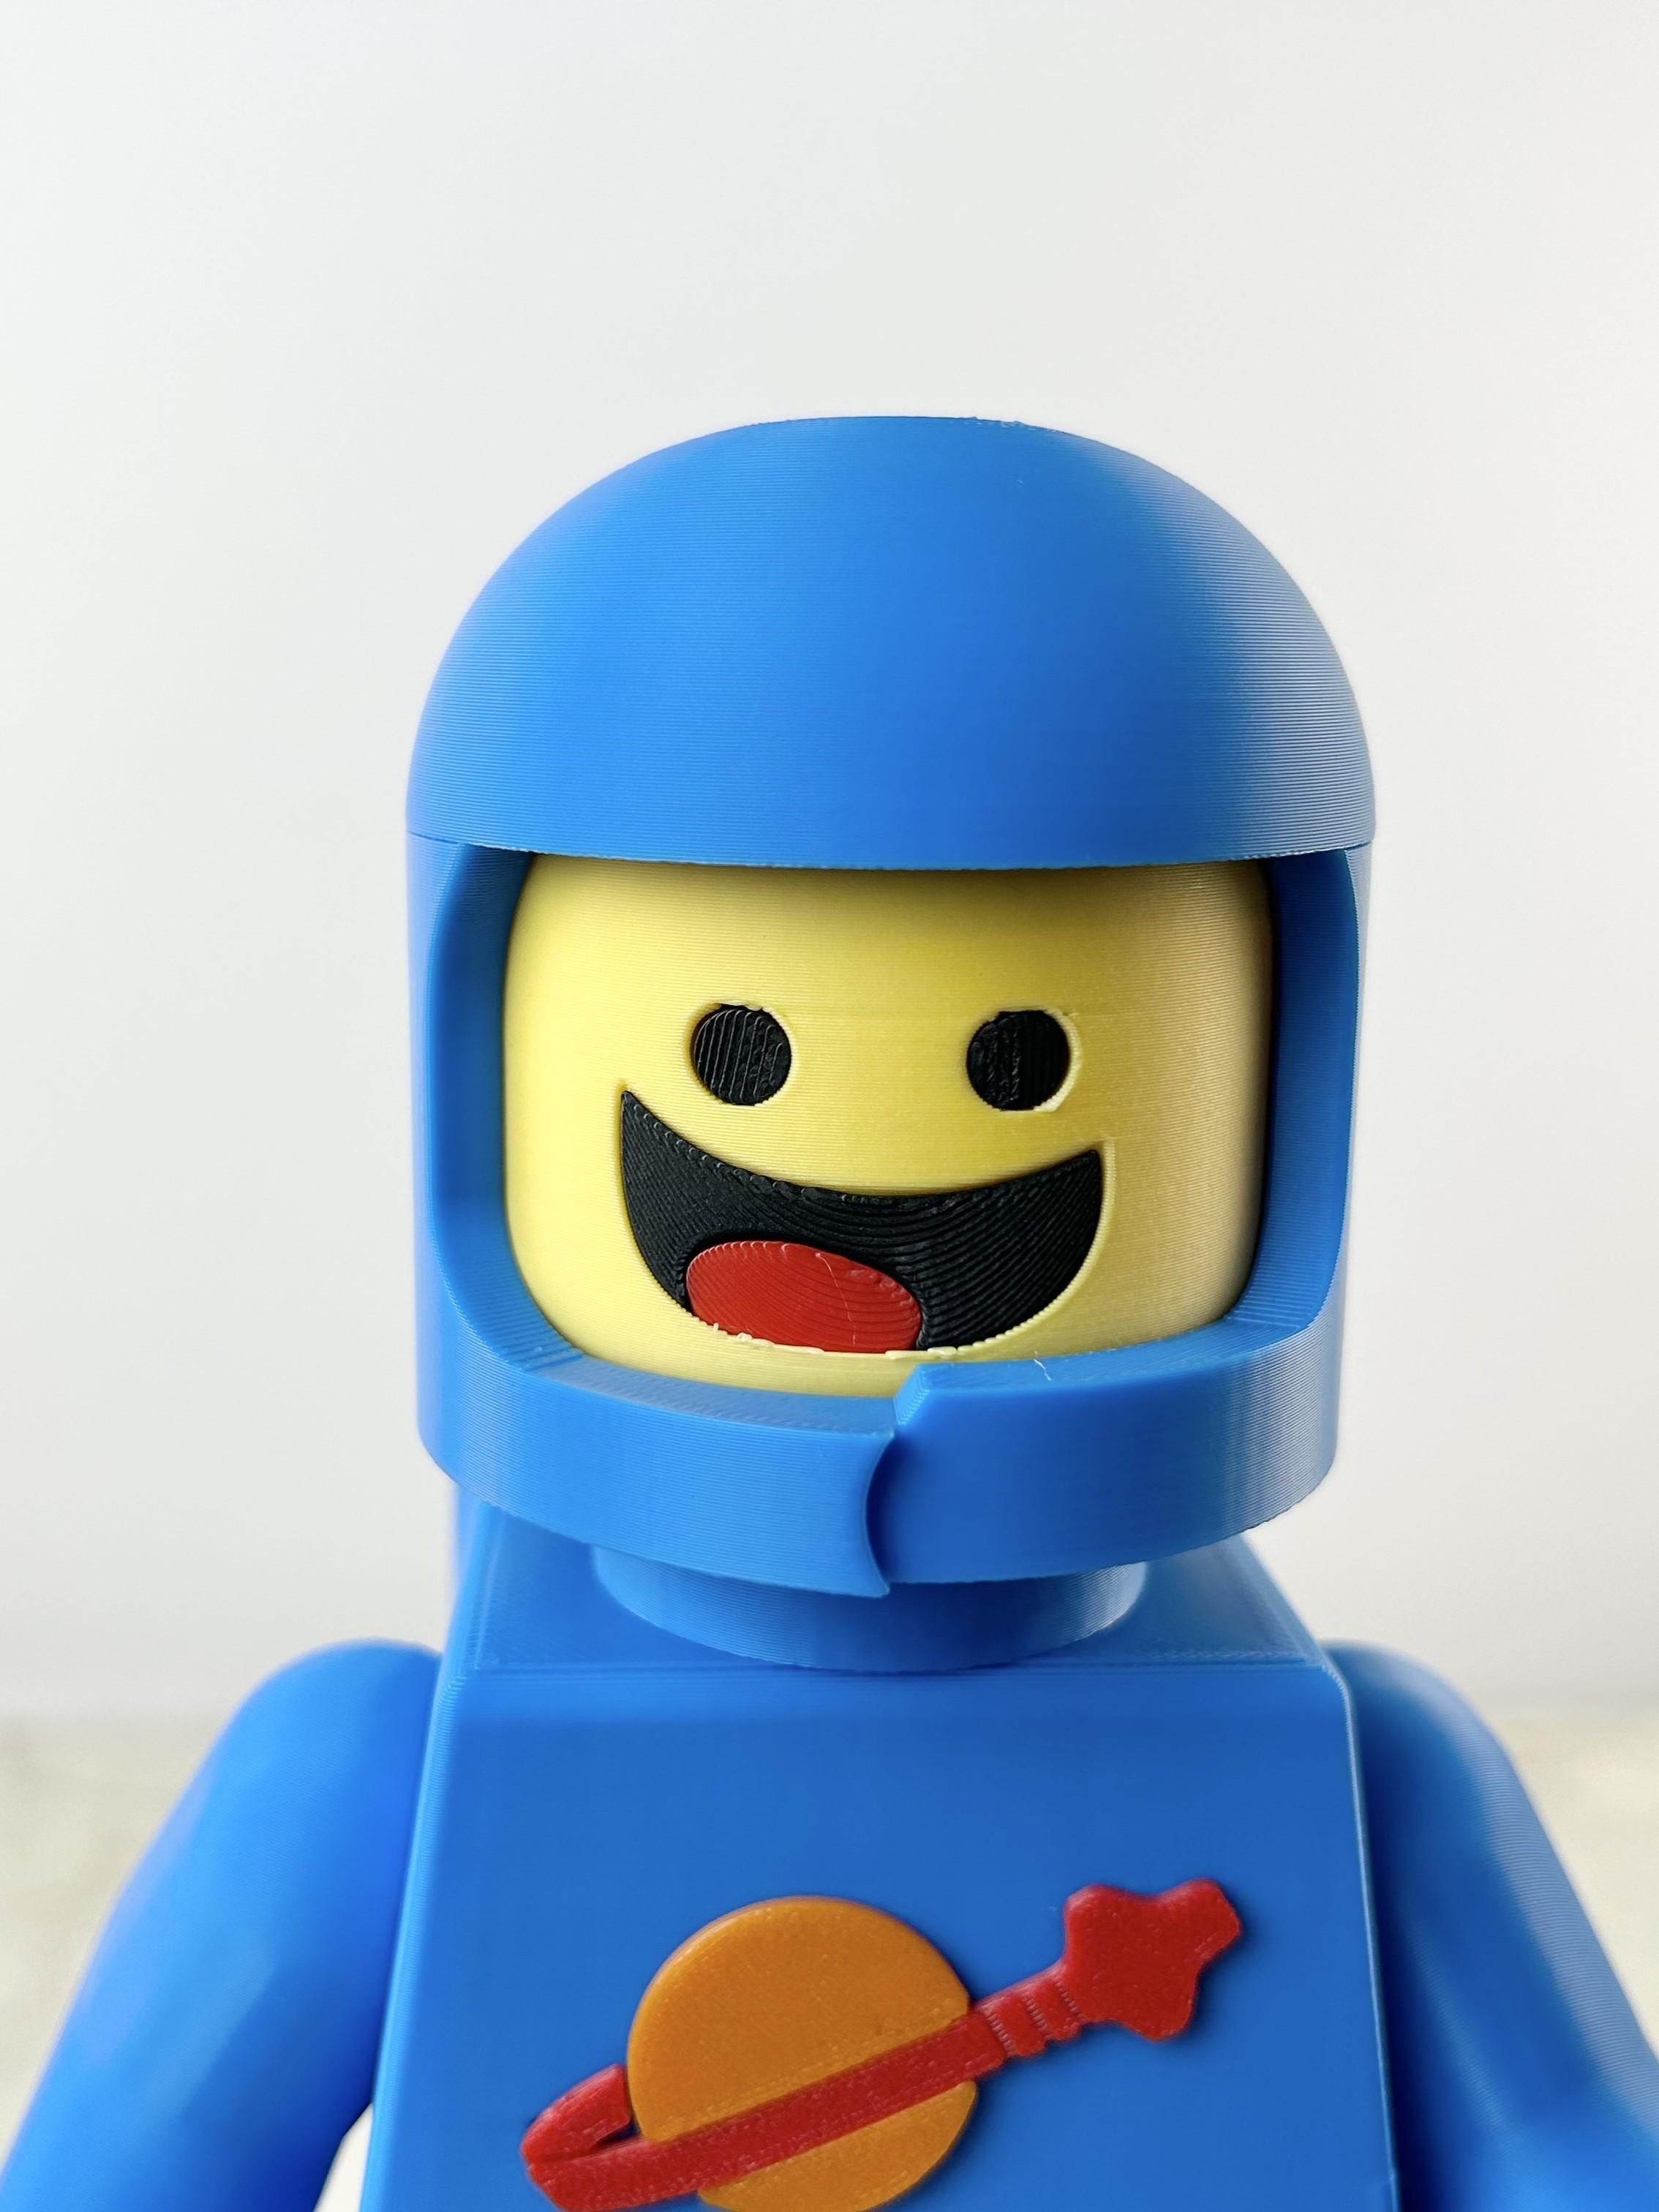 Benny's Head and Helmet (6:1 LEGO-inspired brick figure, NO MMU/AMS, NO supports, NO glue) 3d model